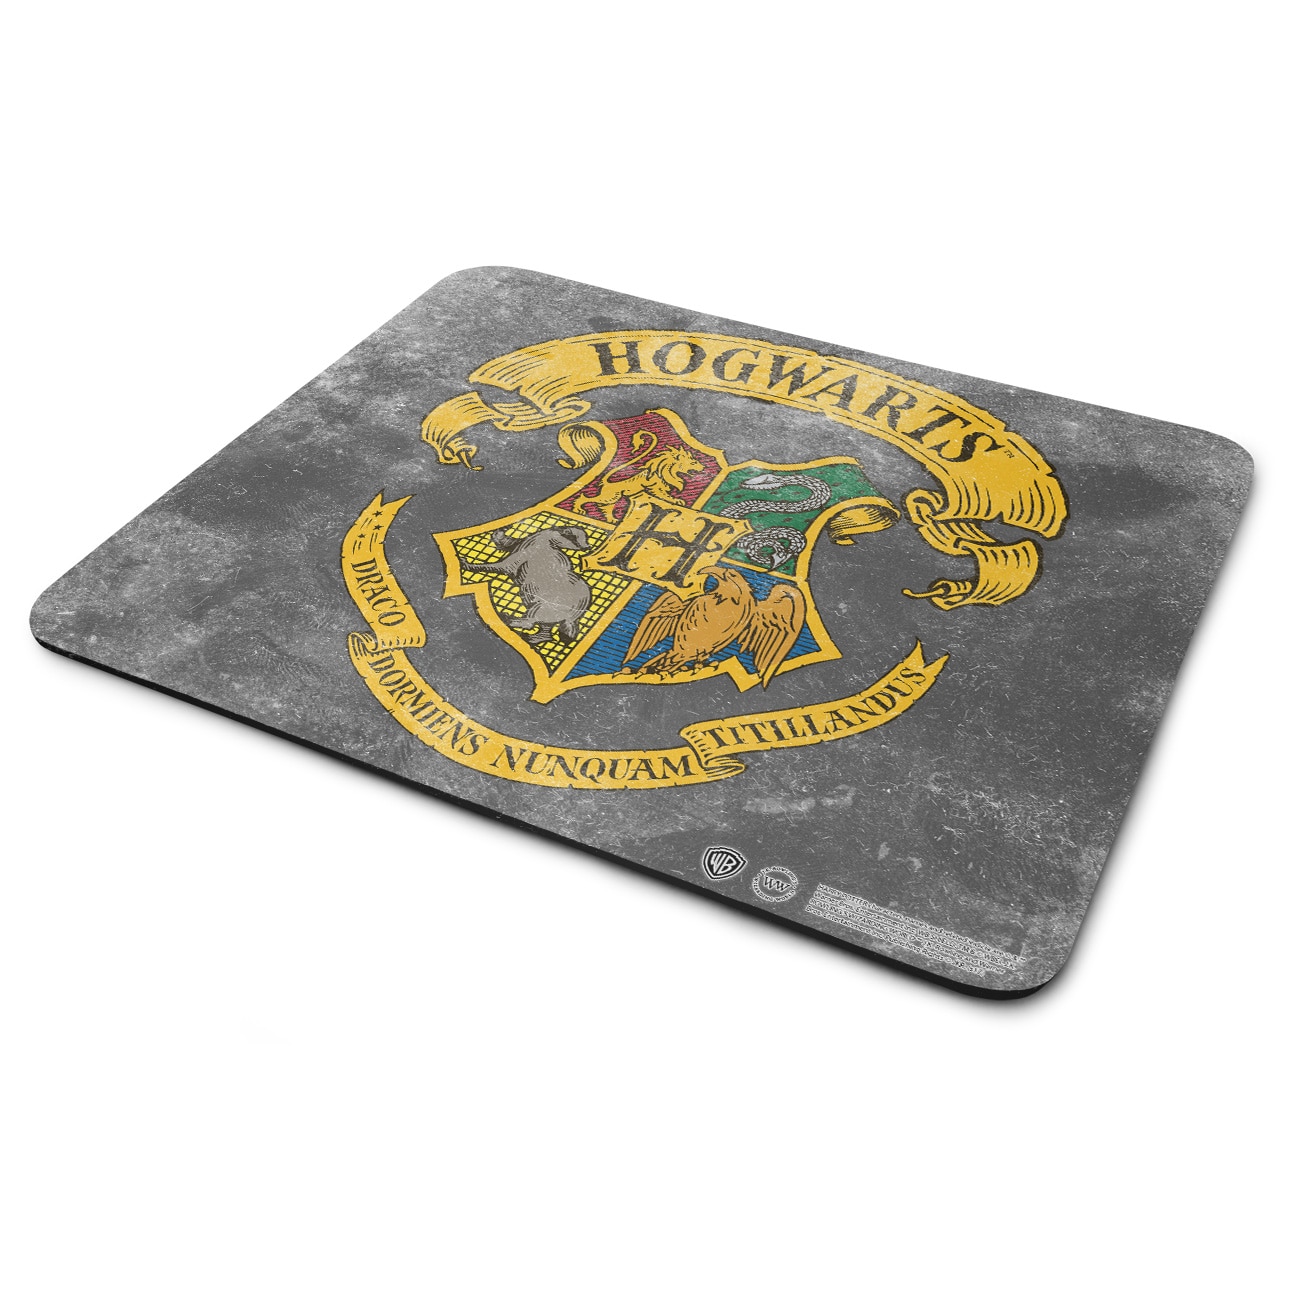 Hogwarts Crest Mouse Pad